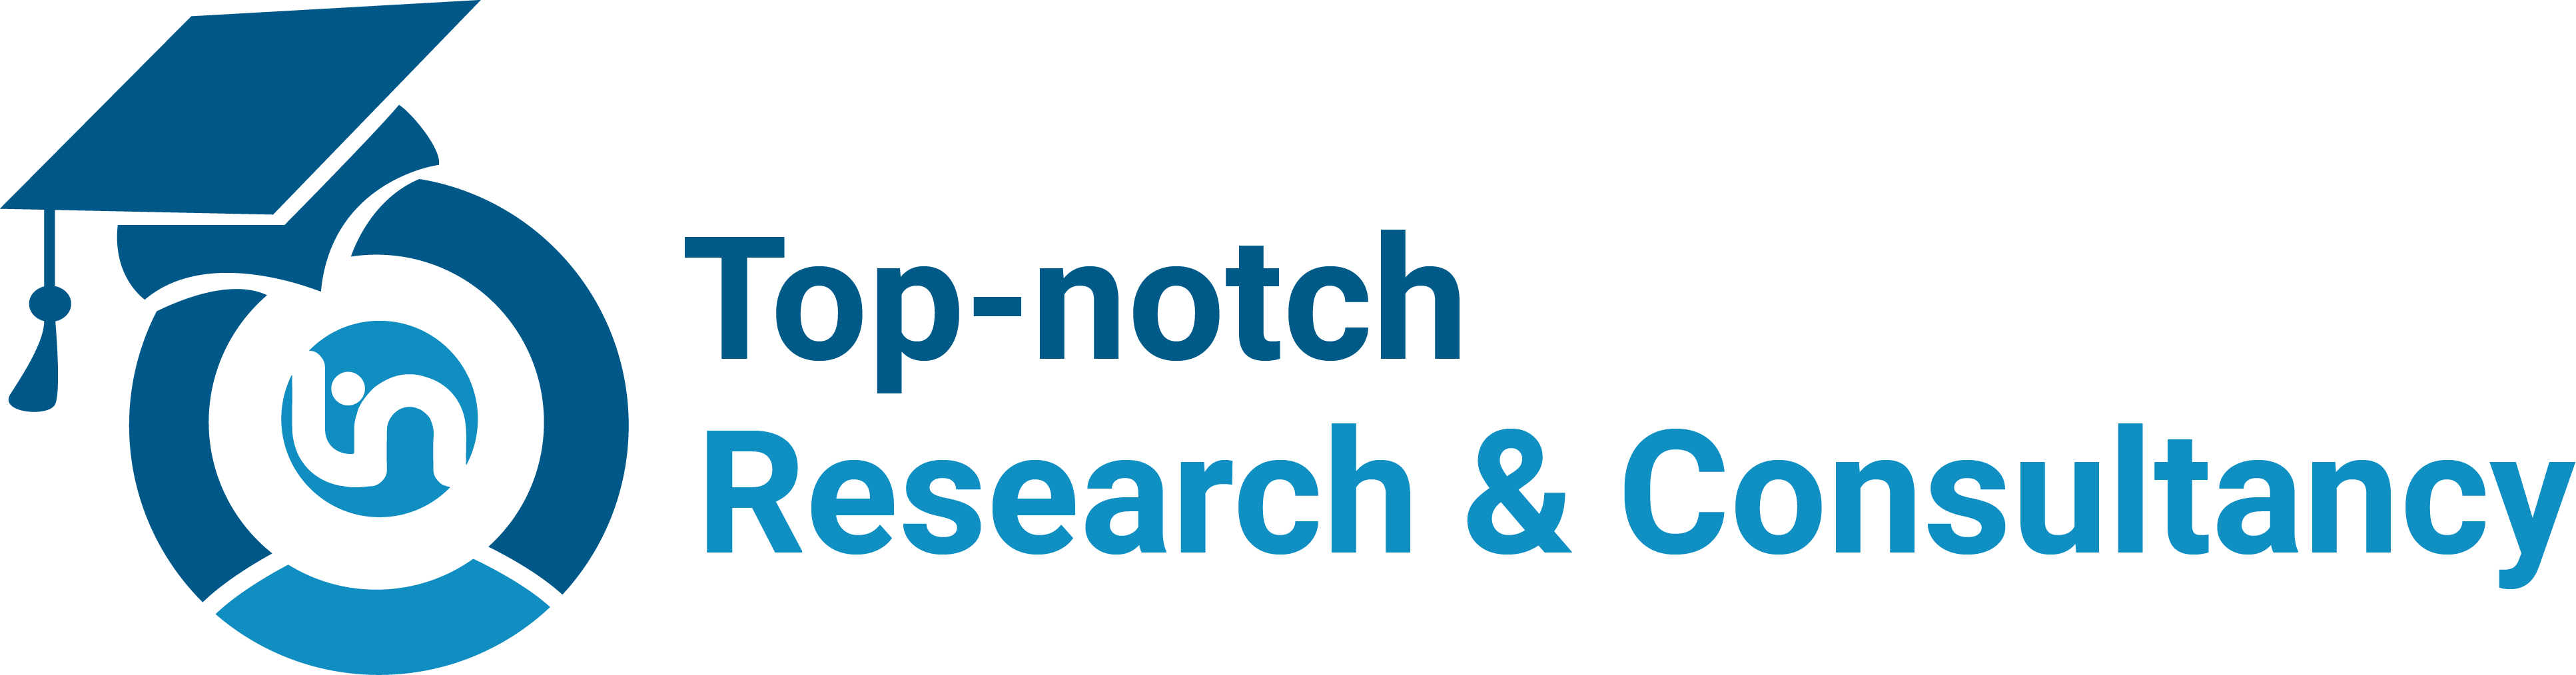 top notch research logo